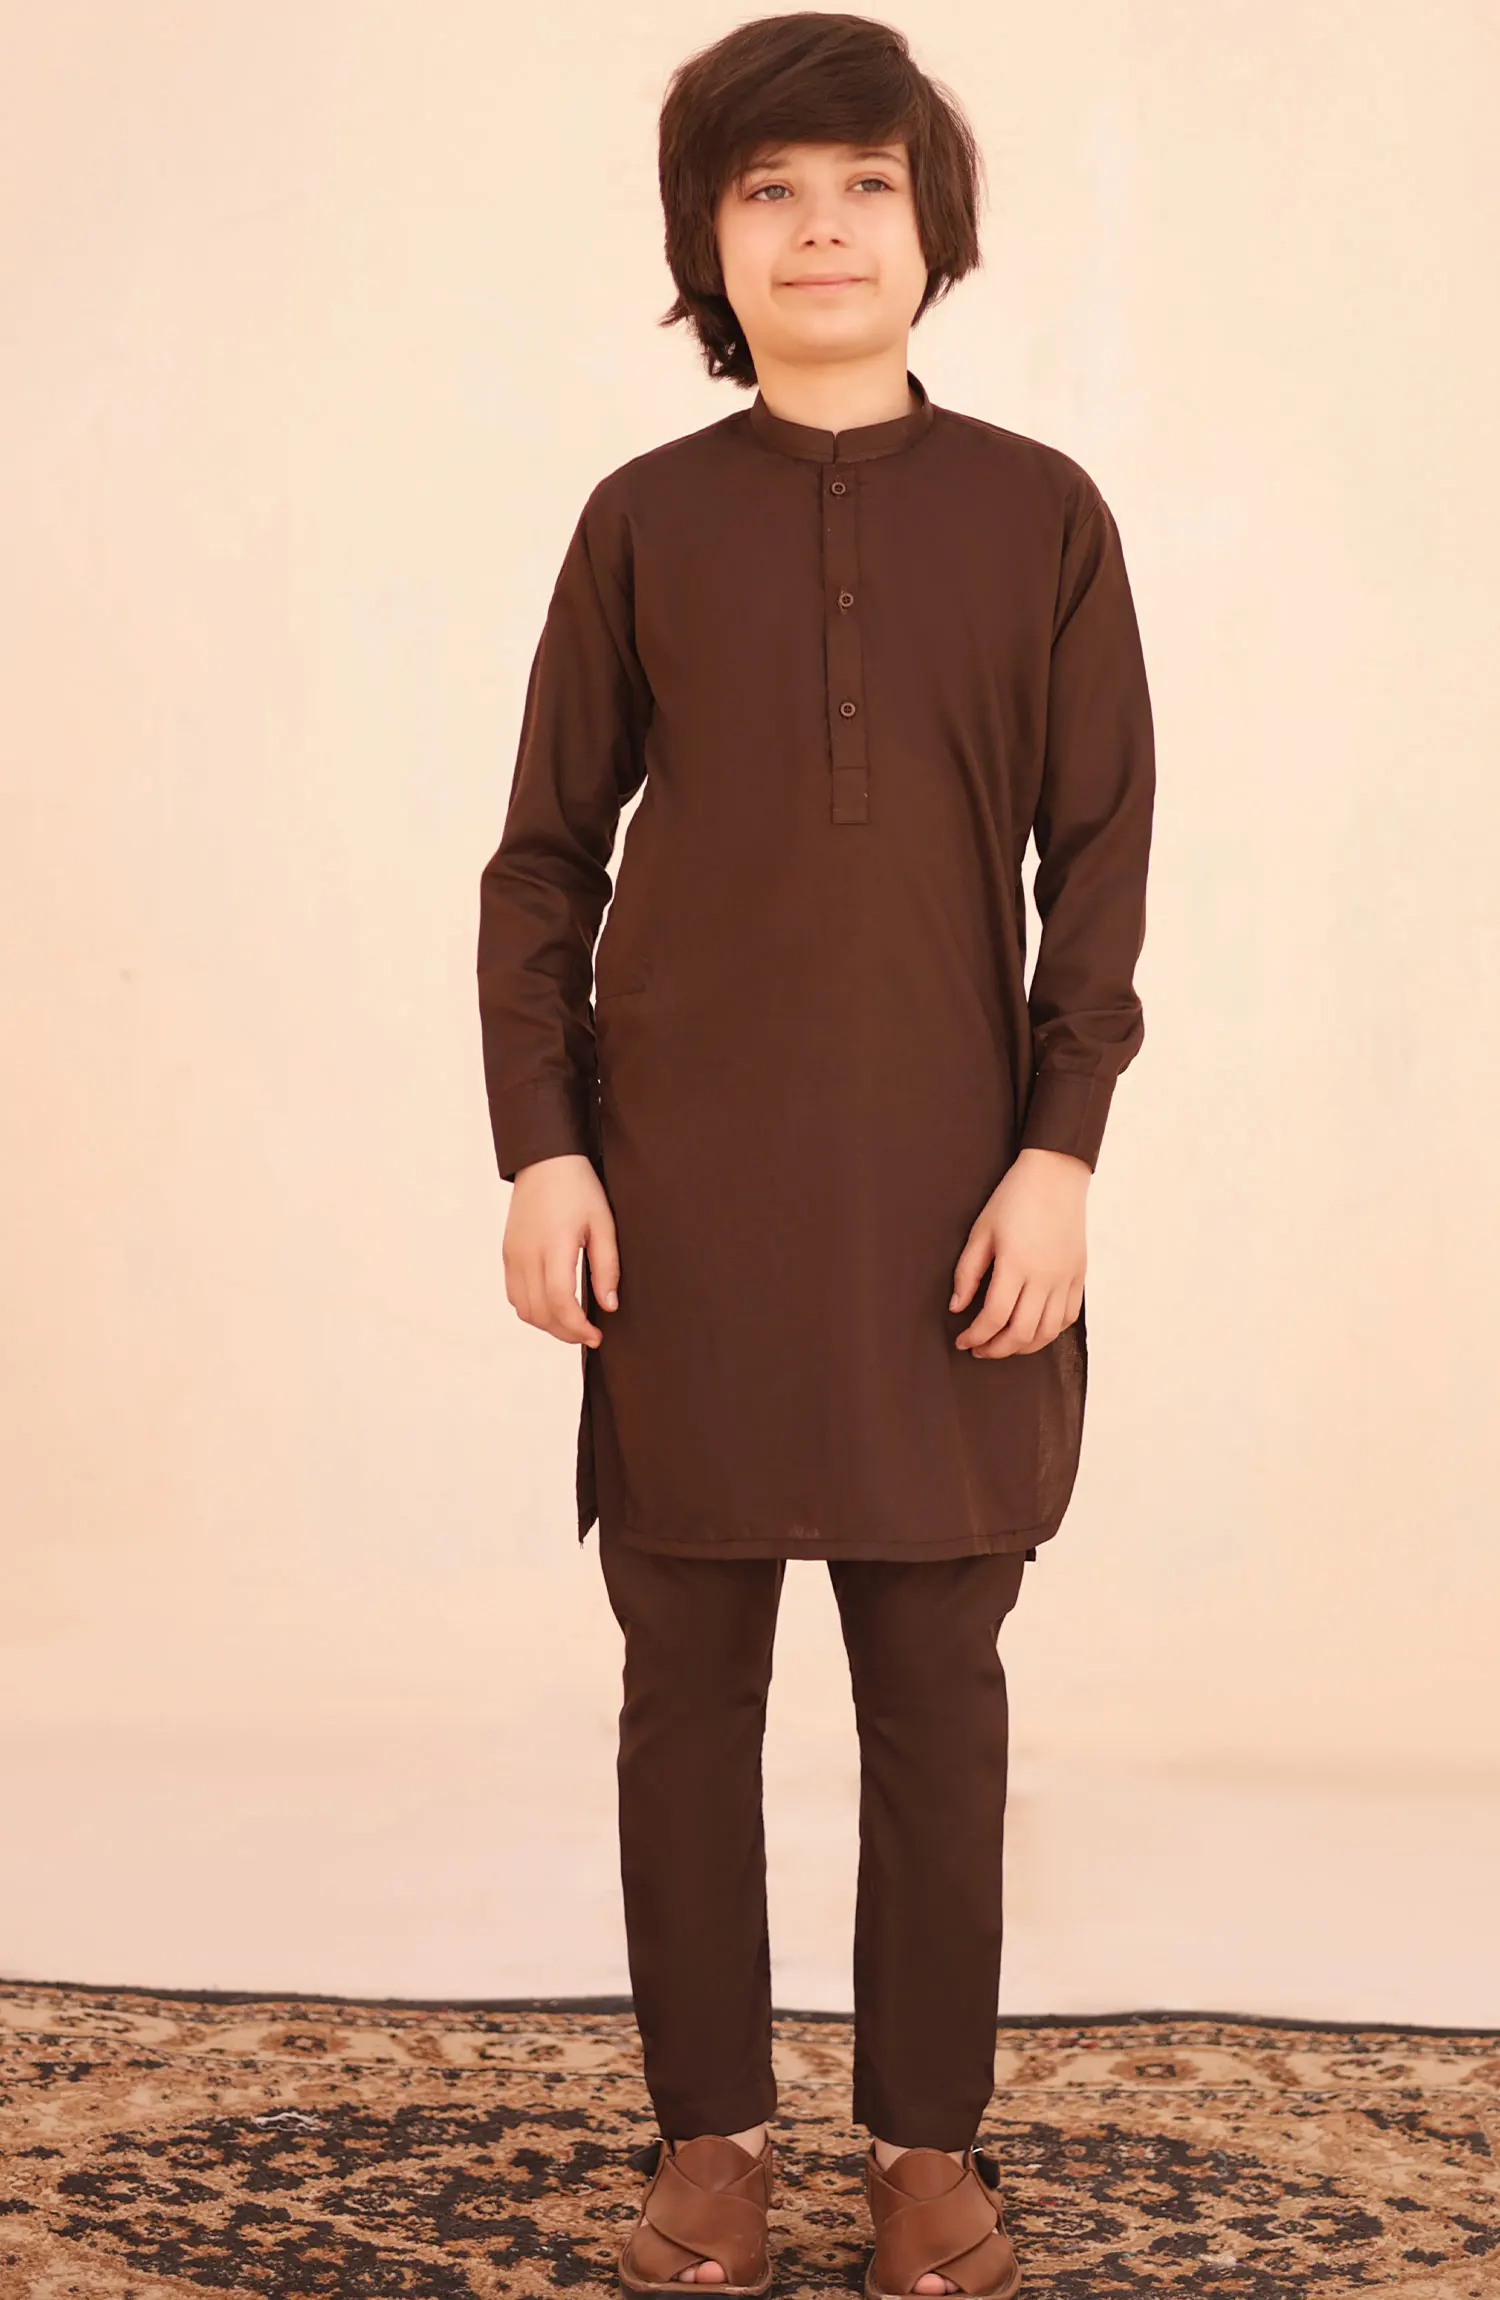 Ramazan Edit Kurta Trouser Collection By Hassan Jee - KT 30 Chestnut Brown Kurta Trouser